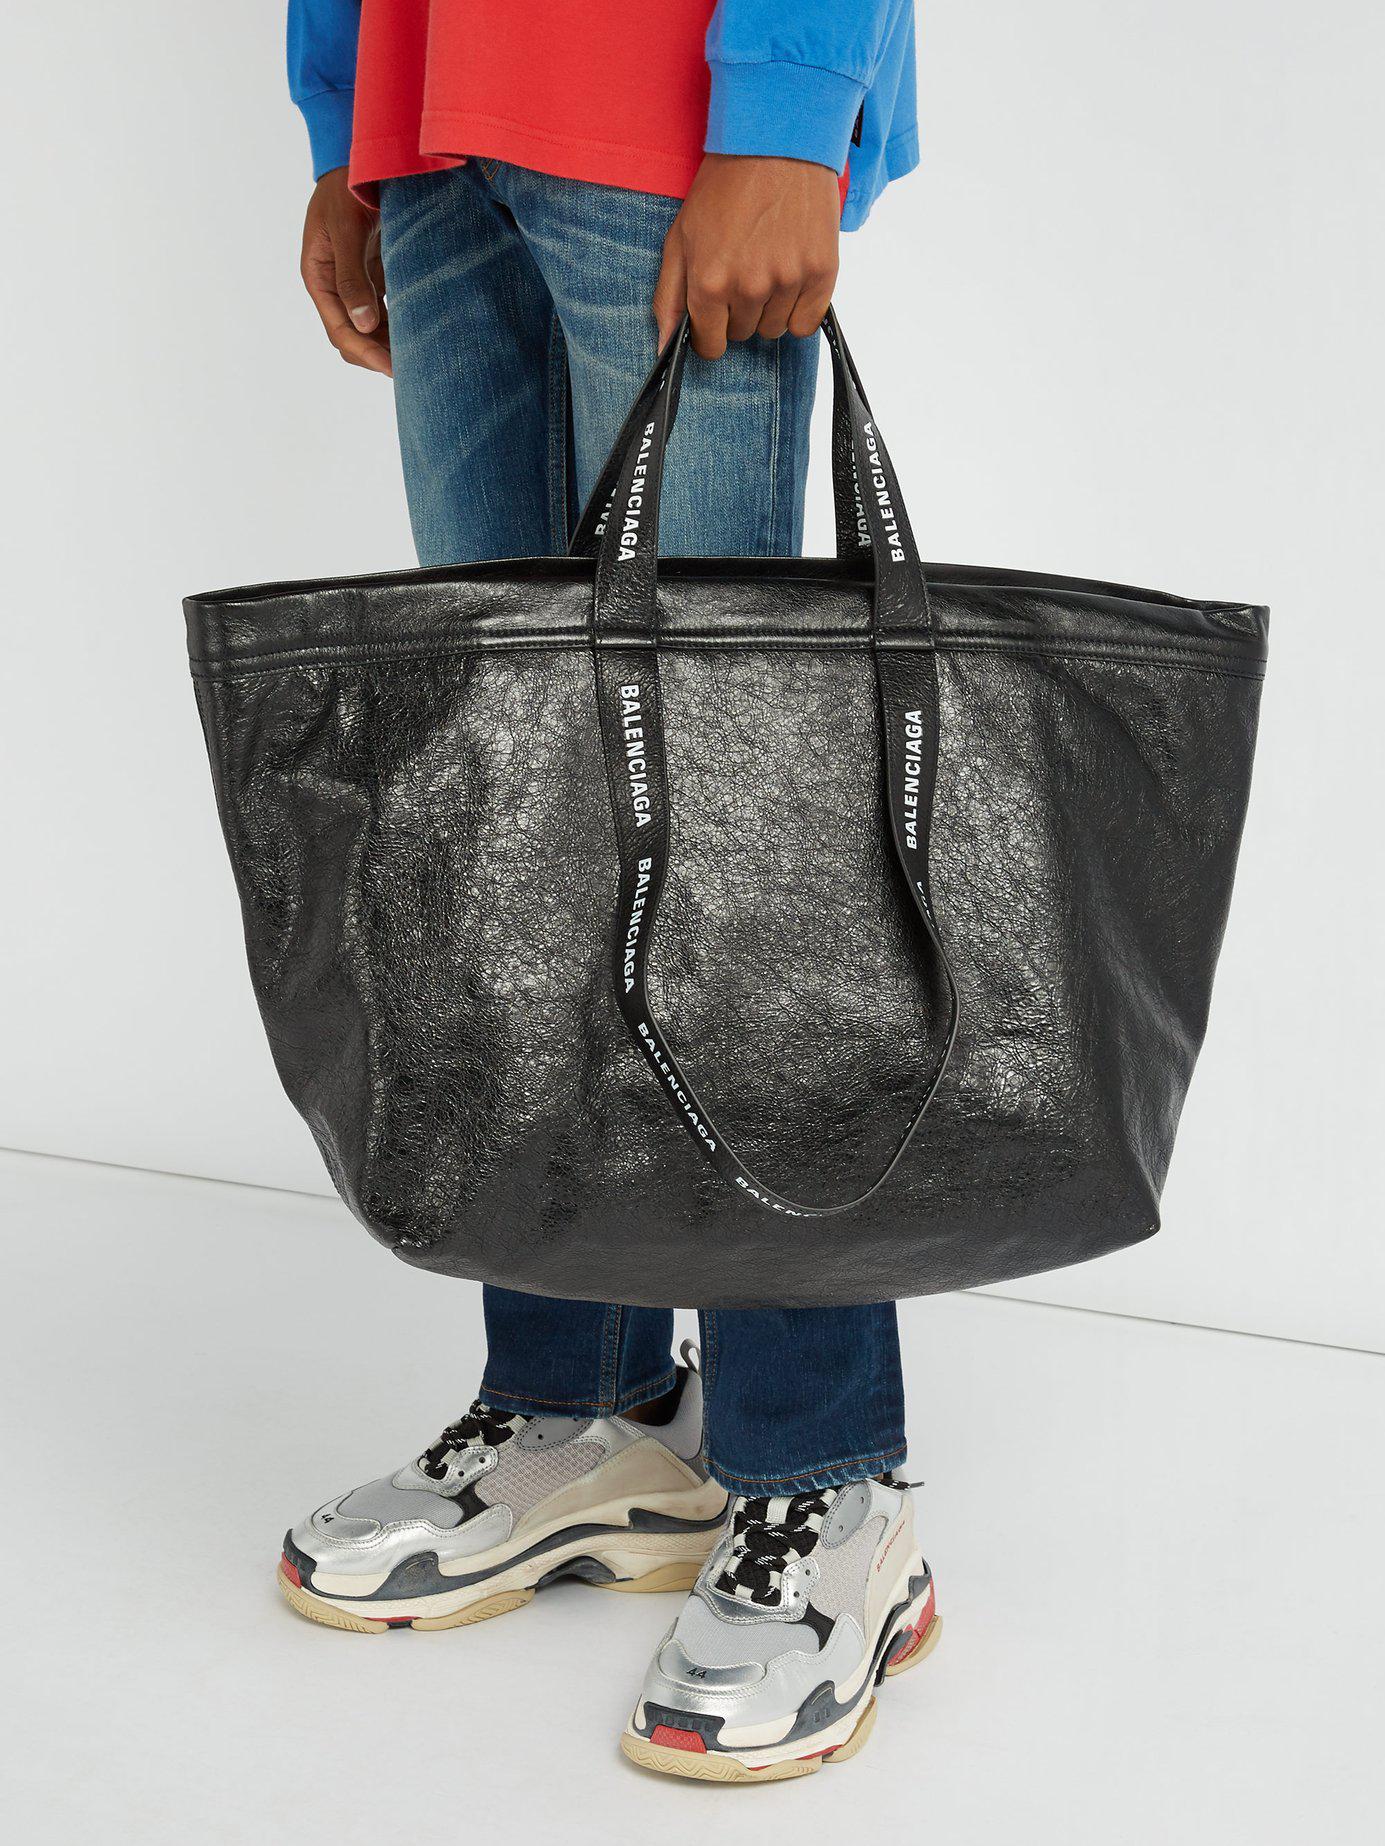 Balenciaga Carry Shopper M Leather Bag in Black White (Black) for Men - Lyst